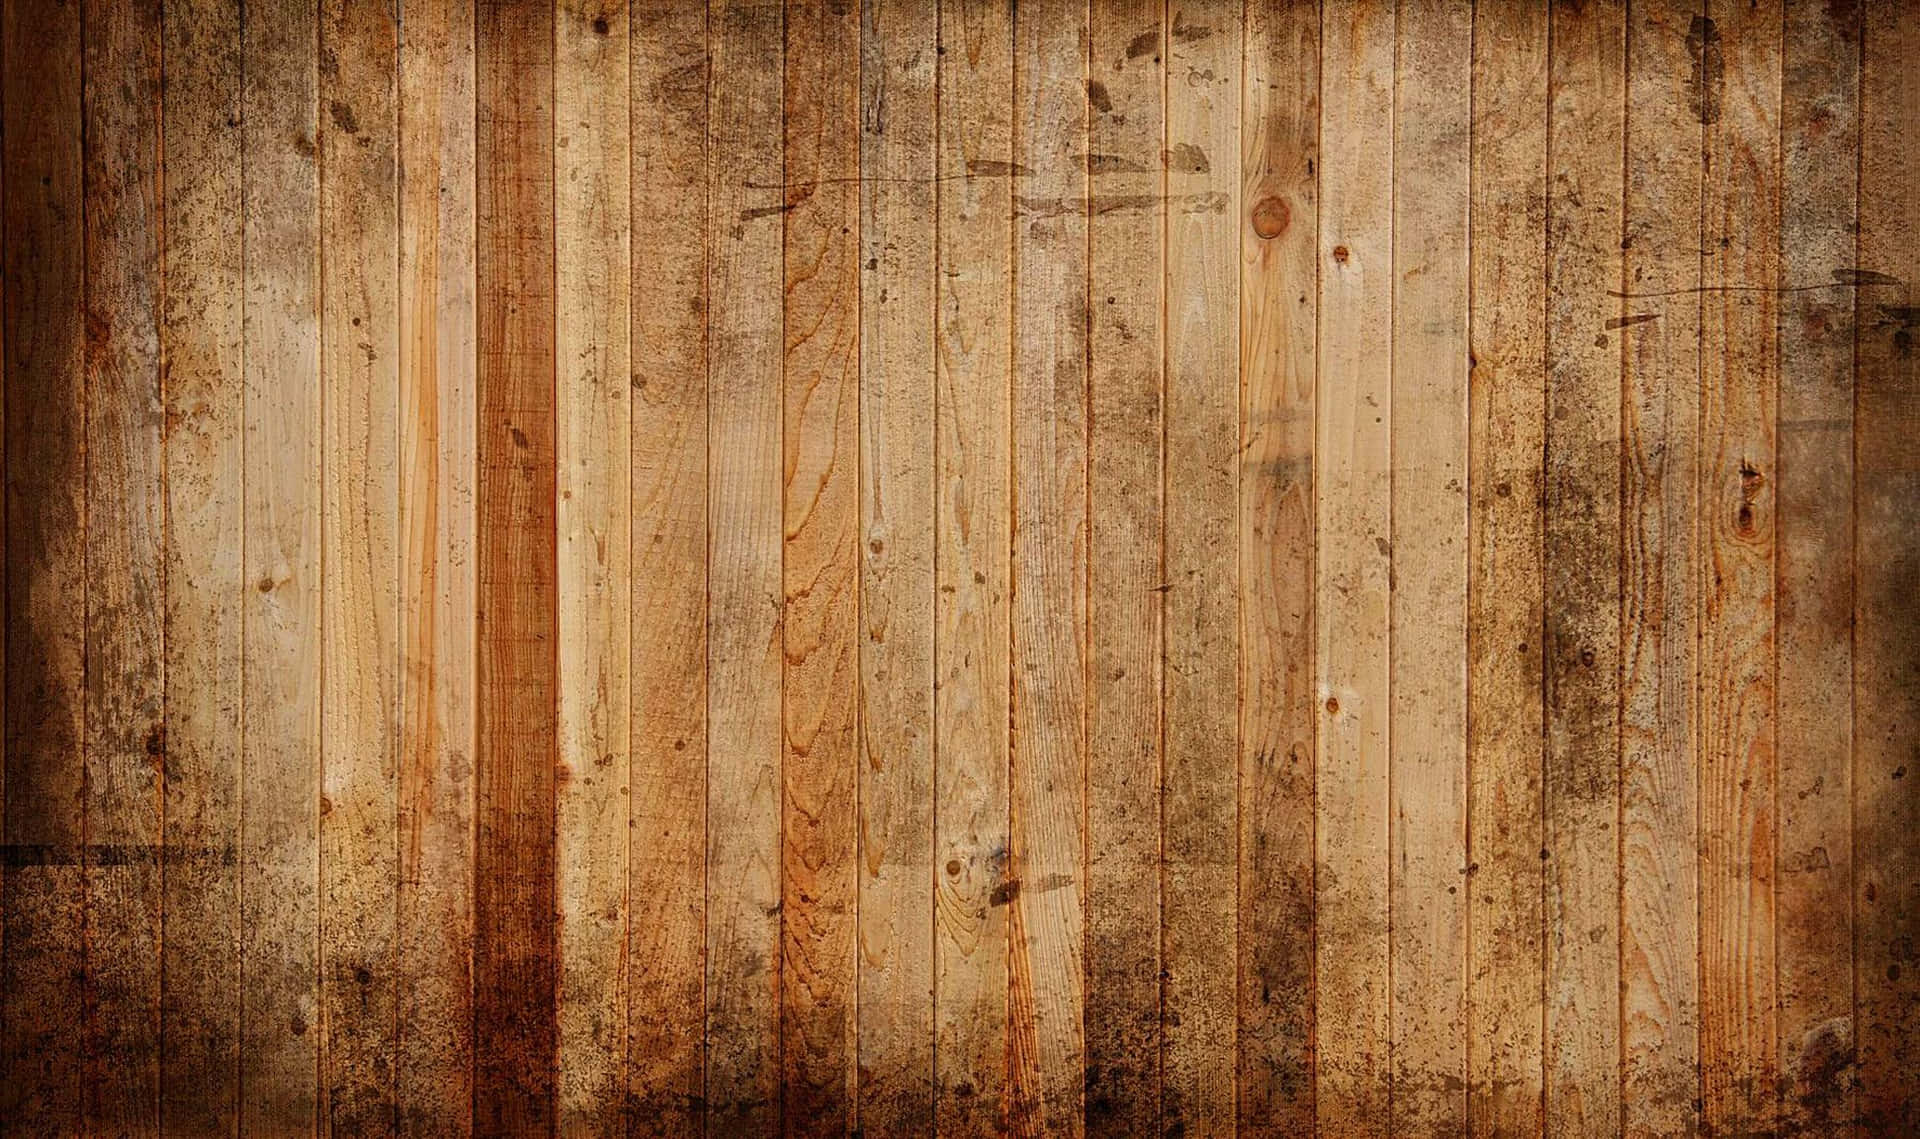 Rustic barn wood door with shingle roof and open windows Wallpaper